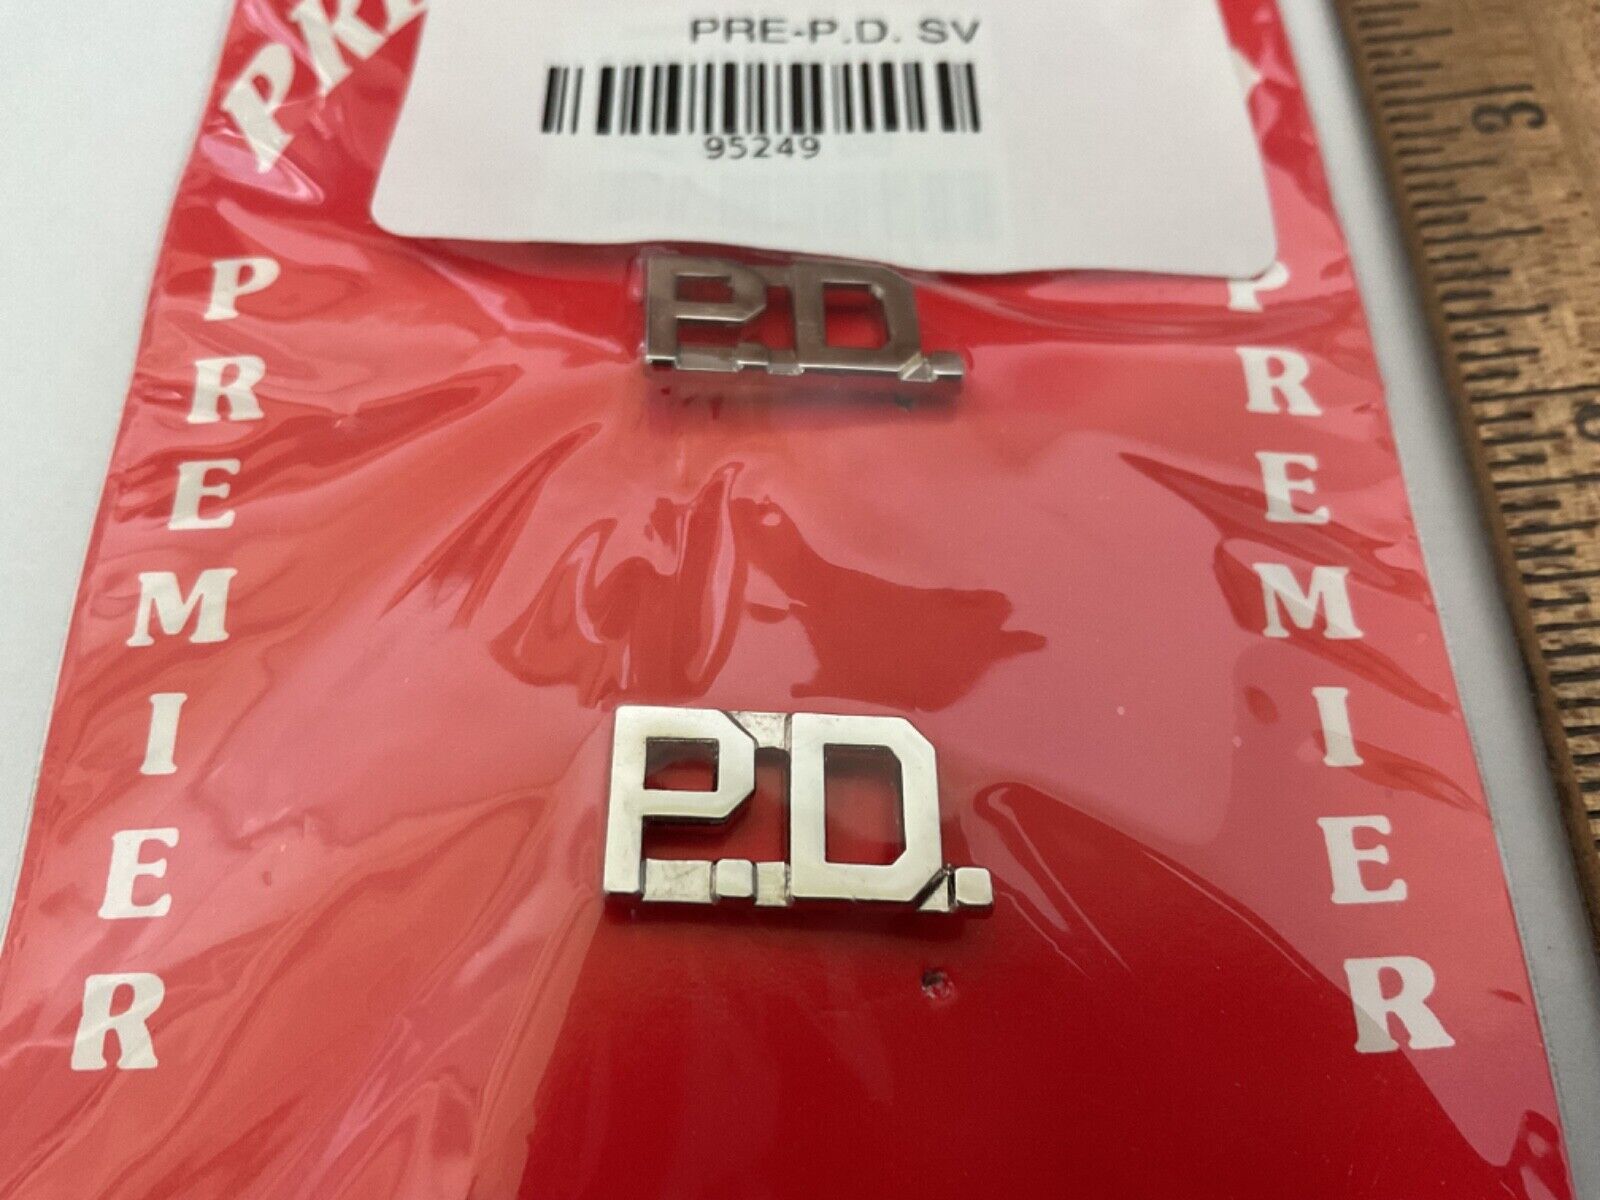 Premier Emblem Police P.D. Silver collar pins 2 pieces 3/8” inch x 3/4” long